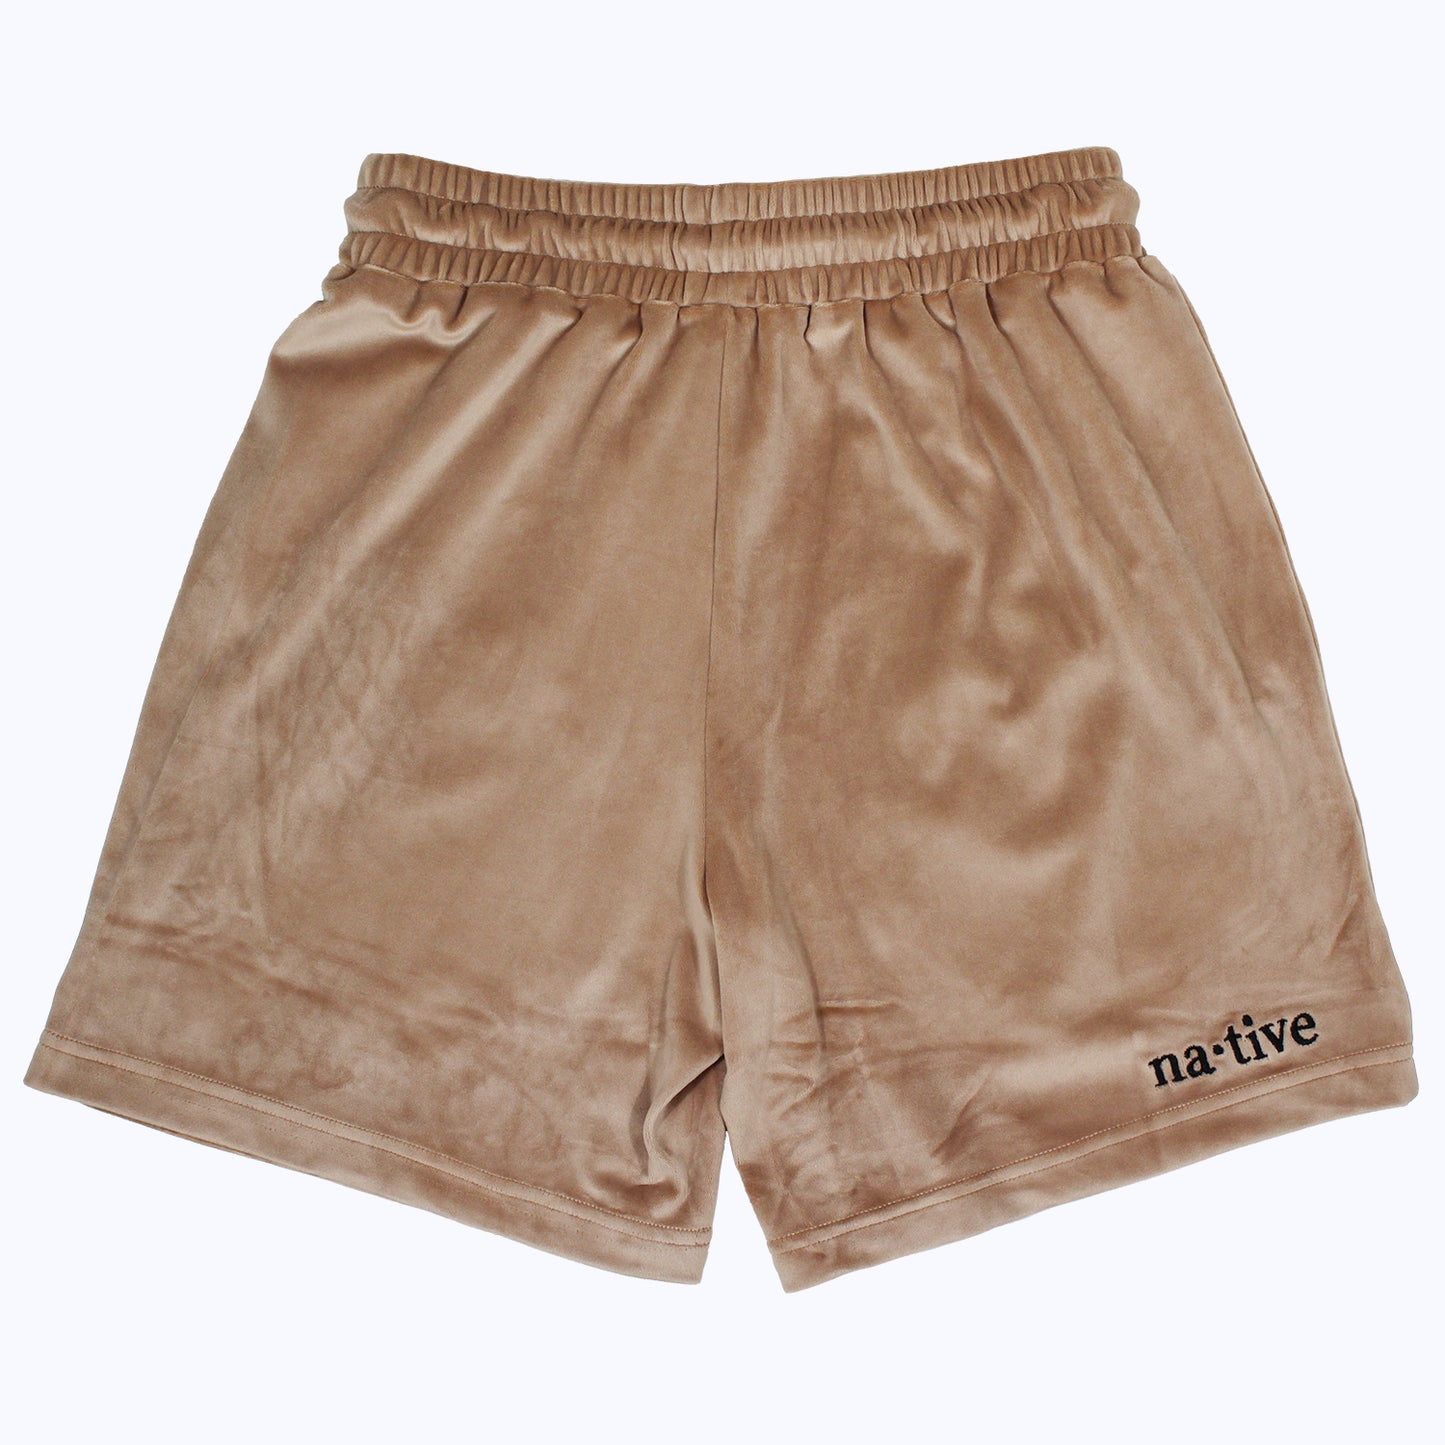 velour shorts in khaki